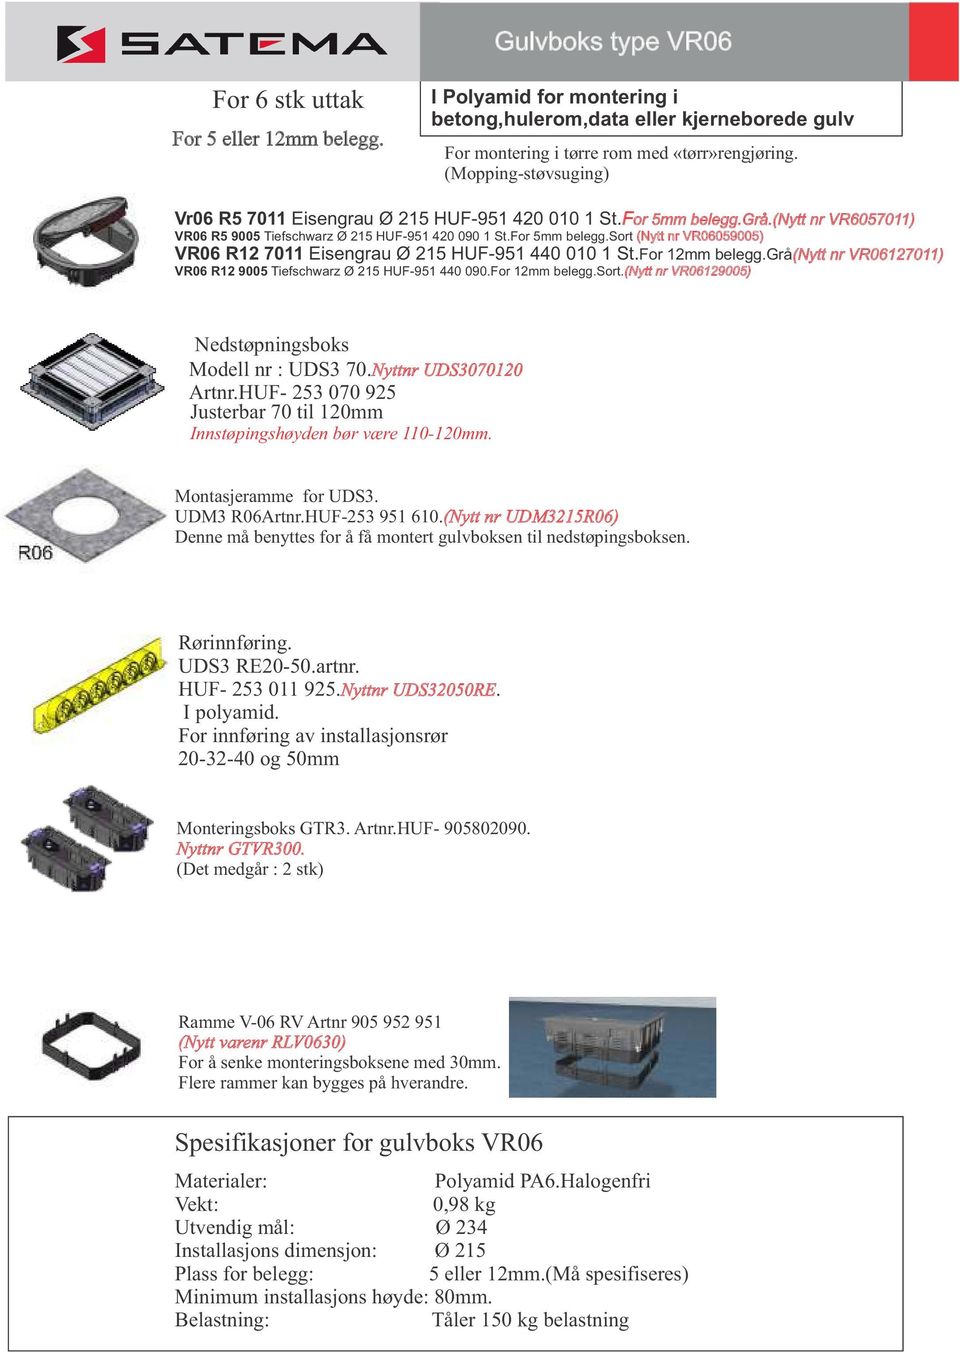 (Nytt nr VR06129005) Nedstøpningsboks Justerbar 70 til 120mm Innstøpingshøyden bør være 110-120mm. Montasjeramme for UDS3. UDM3 R06Artnr.HUF-253 951 610.